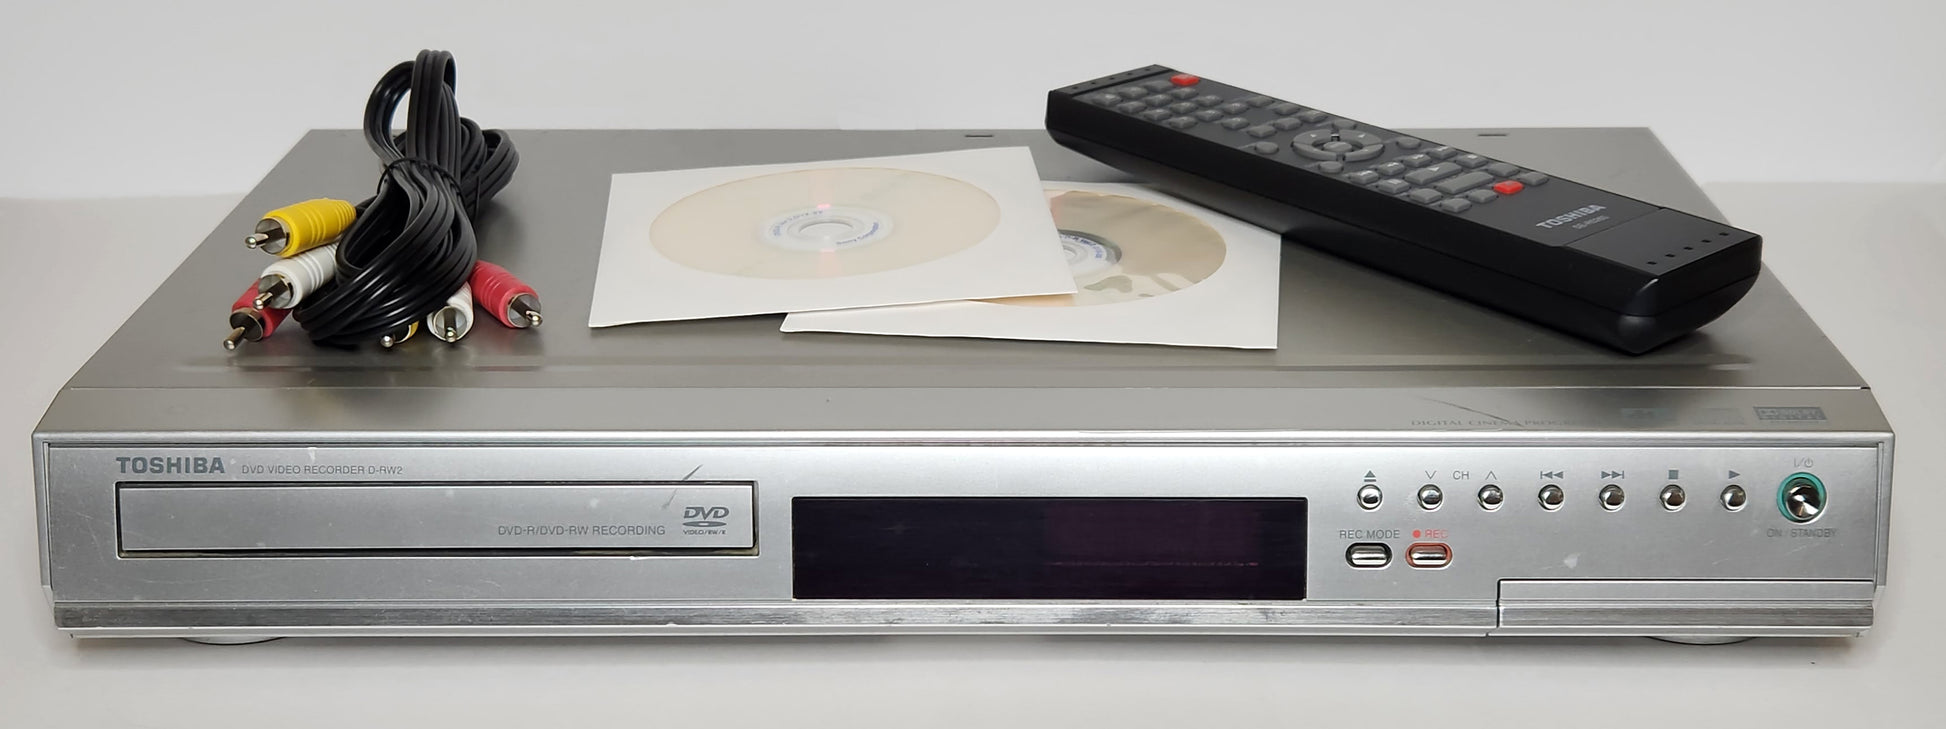 Toshiba D-RW2SU DVD Recorder - with Accessories